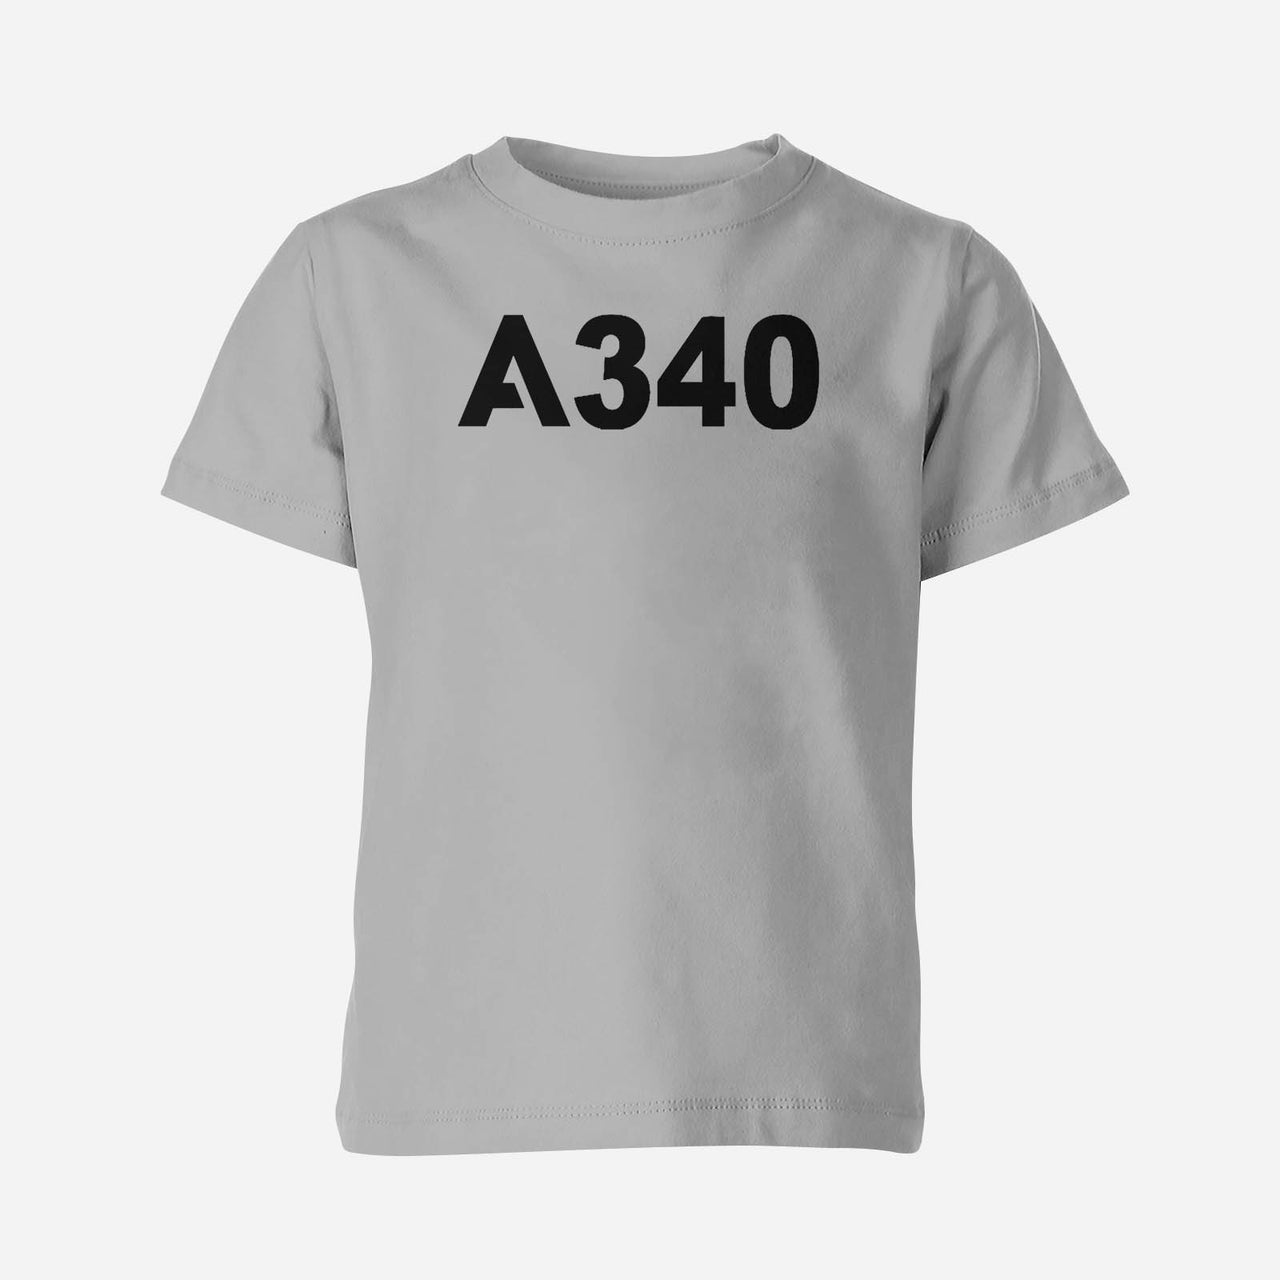 A340 Flat Designed Children T-Shirts